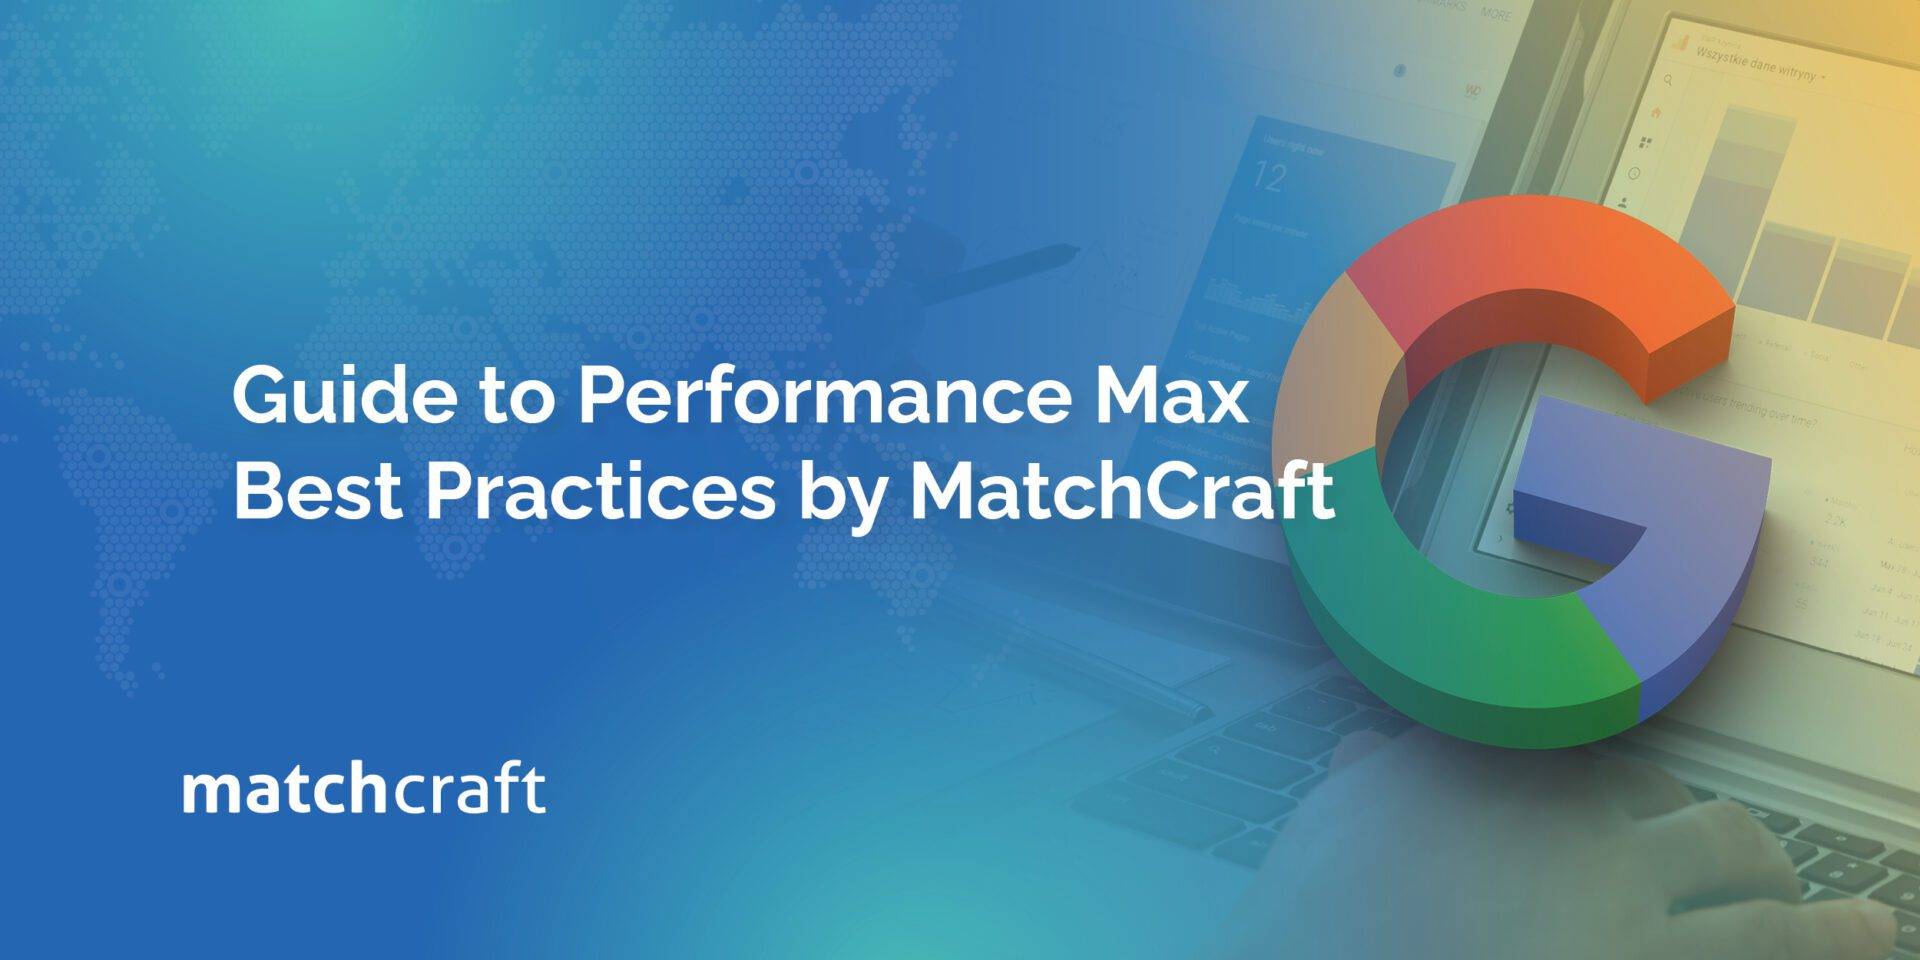 https://www.matchcraft.com/knowledge-center/our-blog/performance-max-best-practices-matchcraft